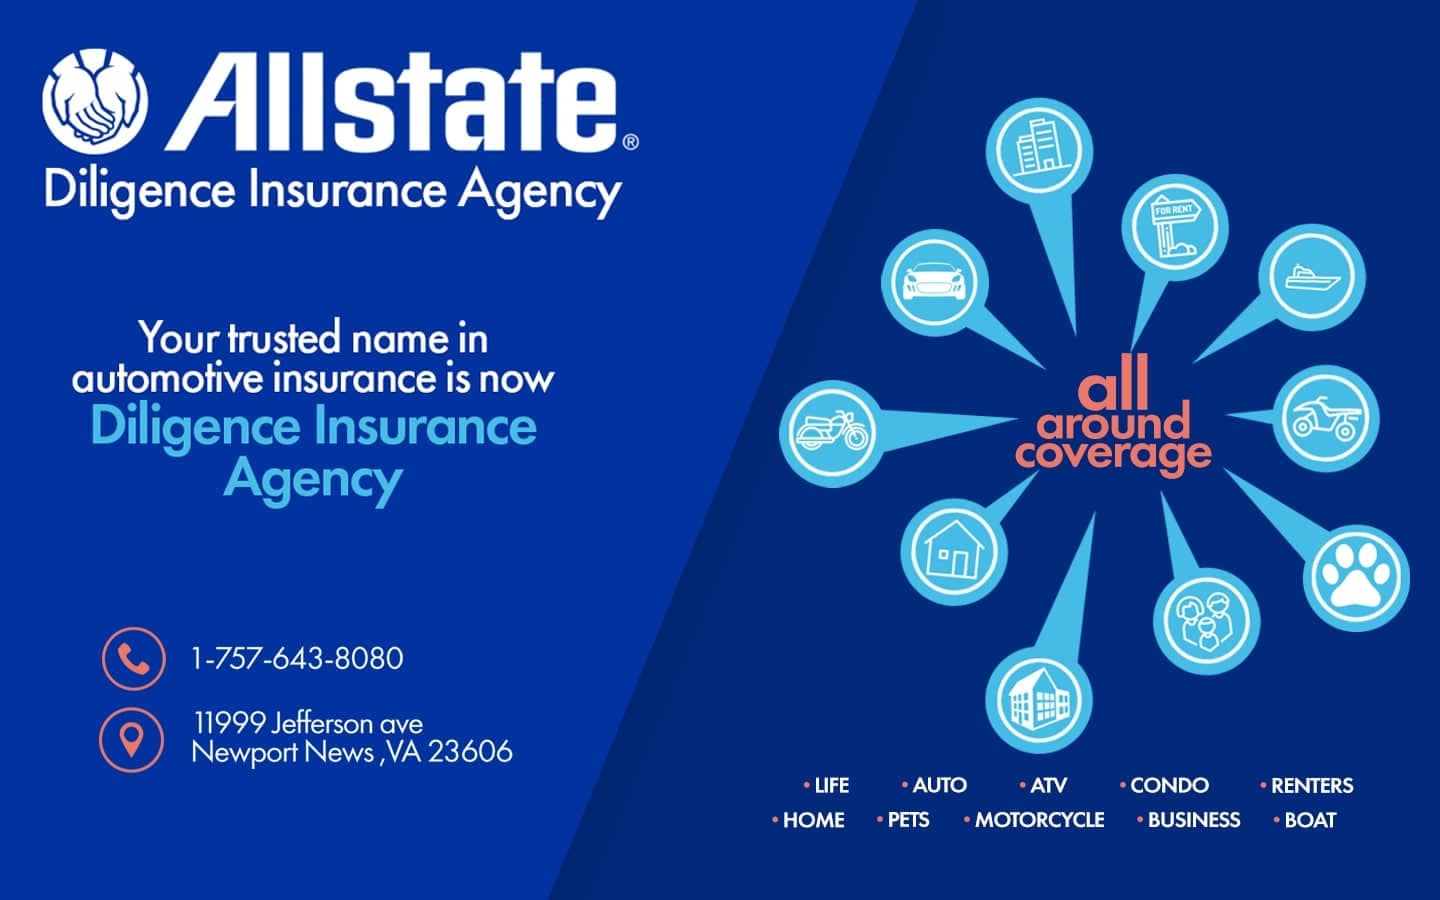 Allstate info image